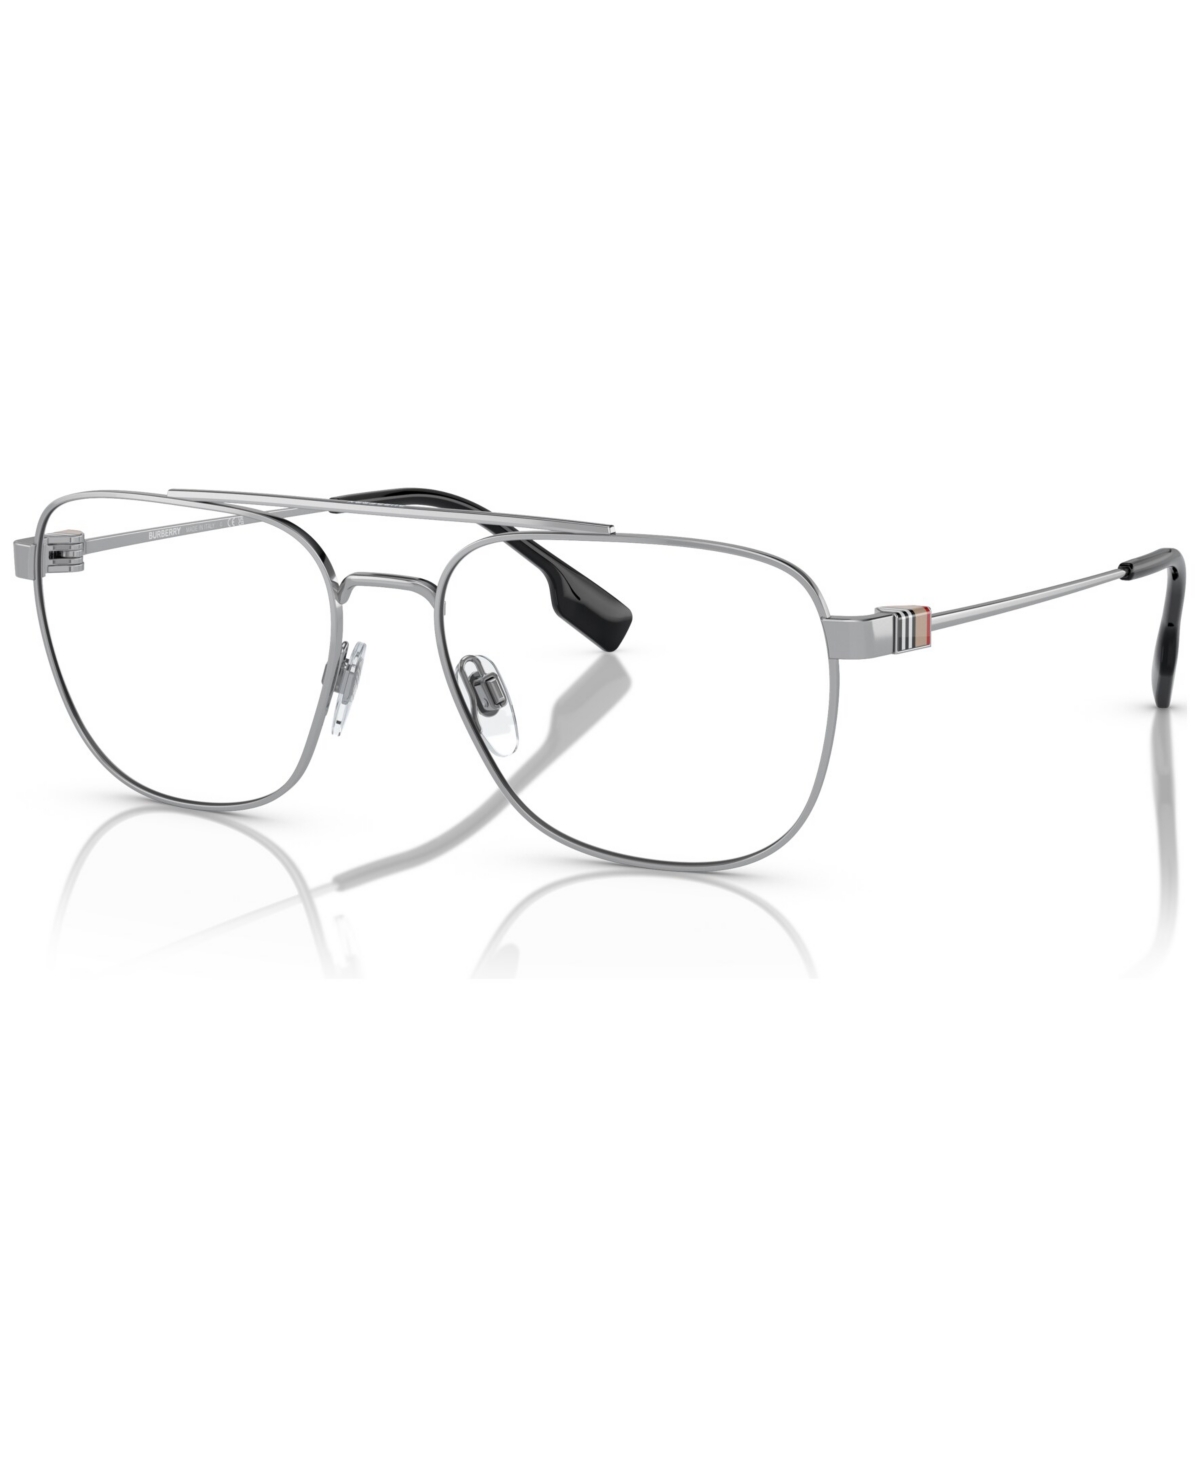 Men's Square Eyeglasses, BE1377 57 - Silver-Tone